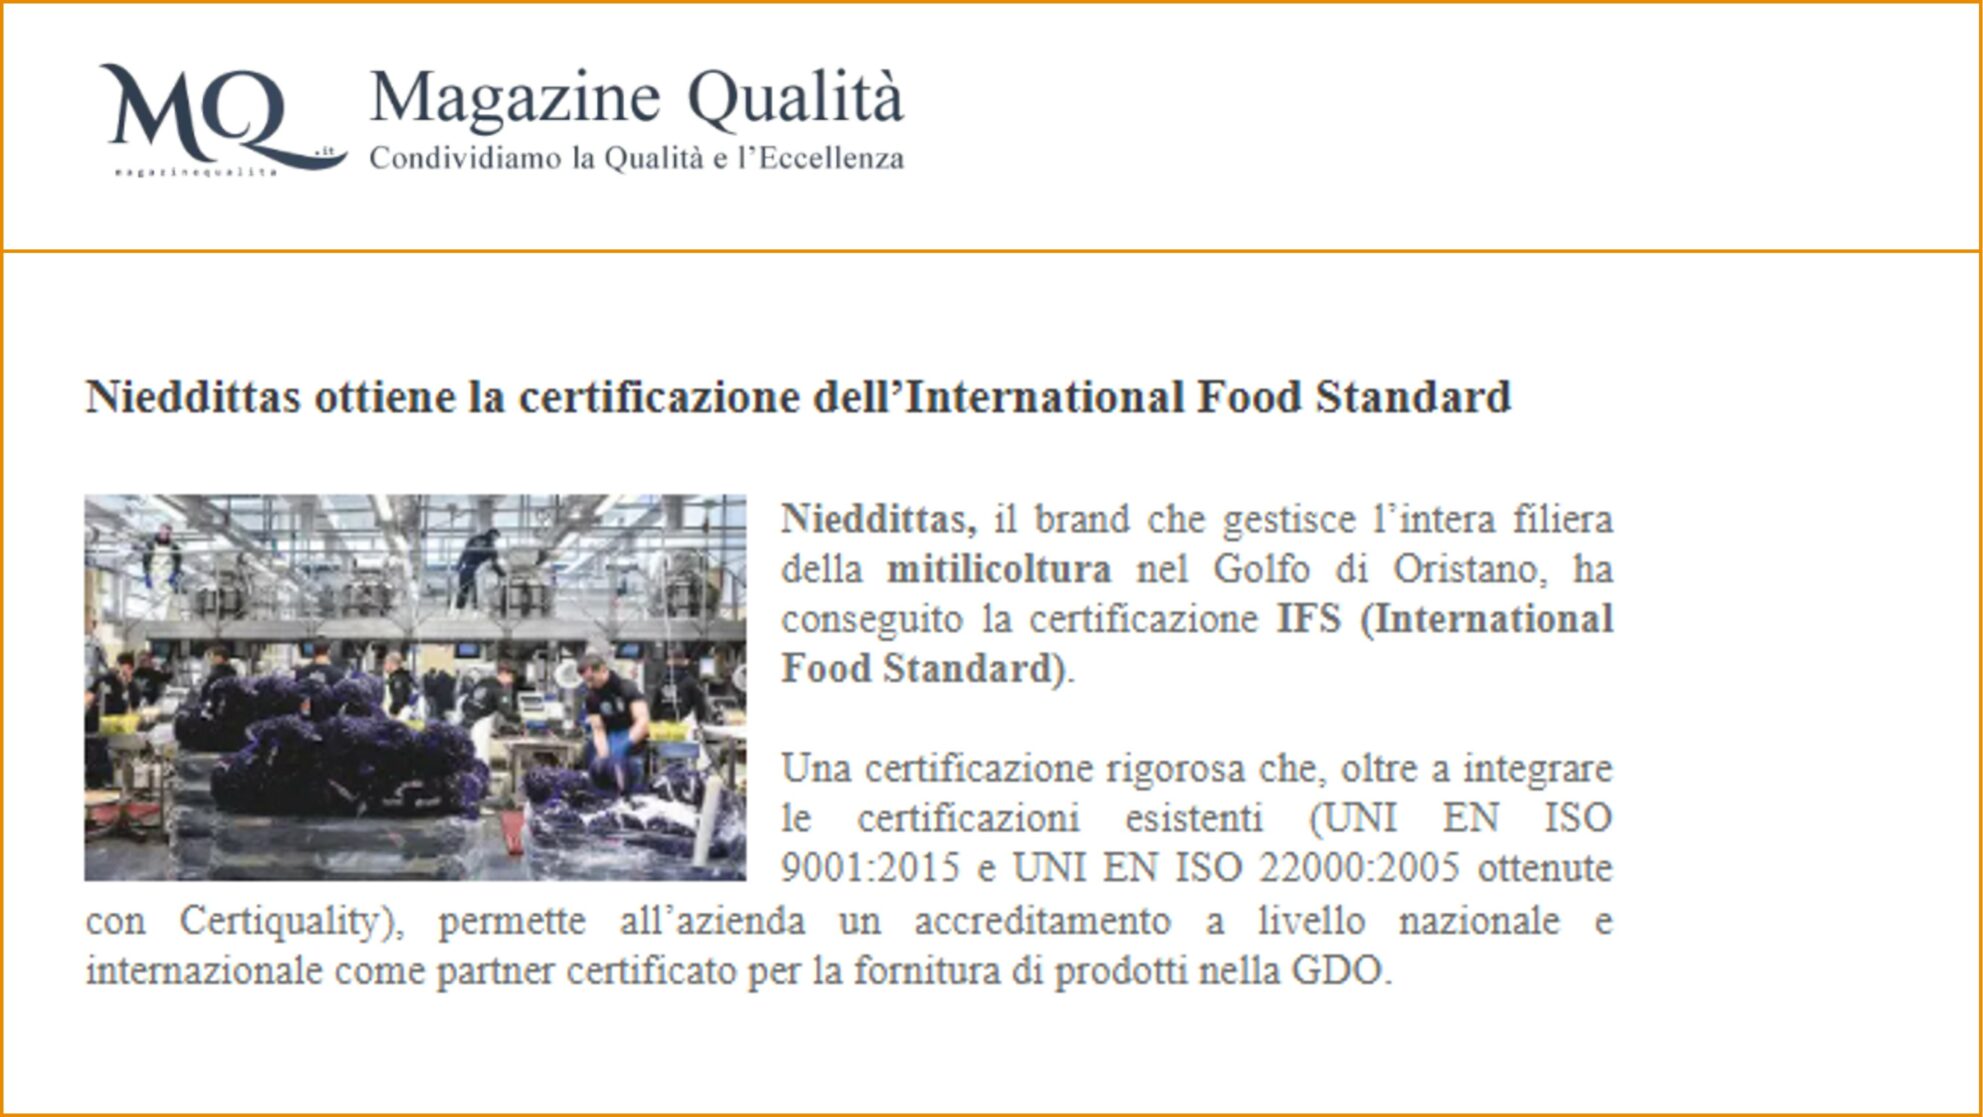 Nieddittas ottiene la certificazione dell’International Food Standard